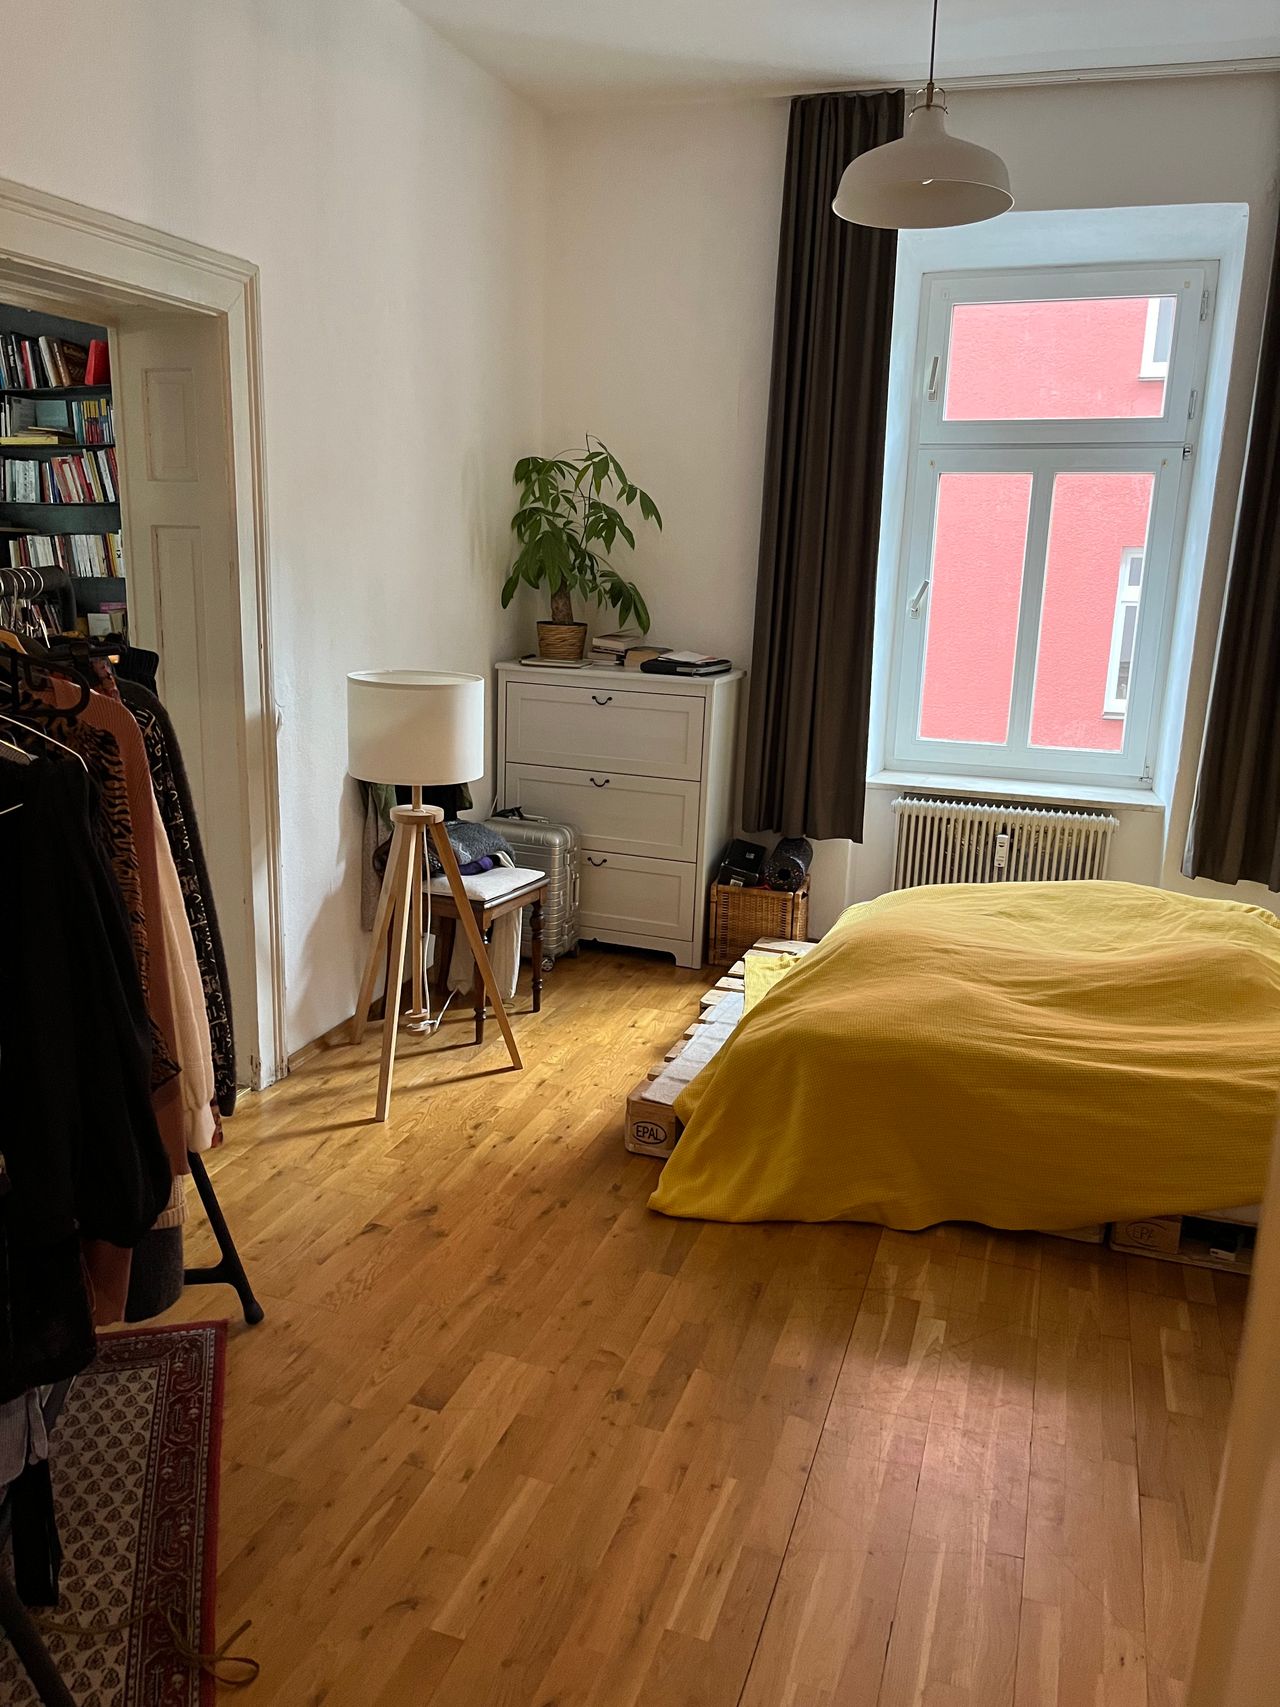 Interim let: Charming 2-room flat in an old building in Munich Neuhausen